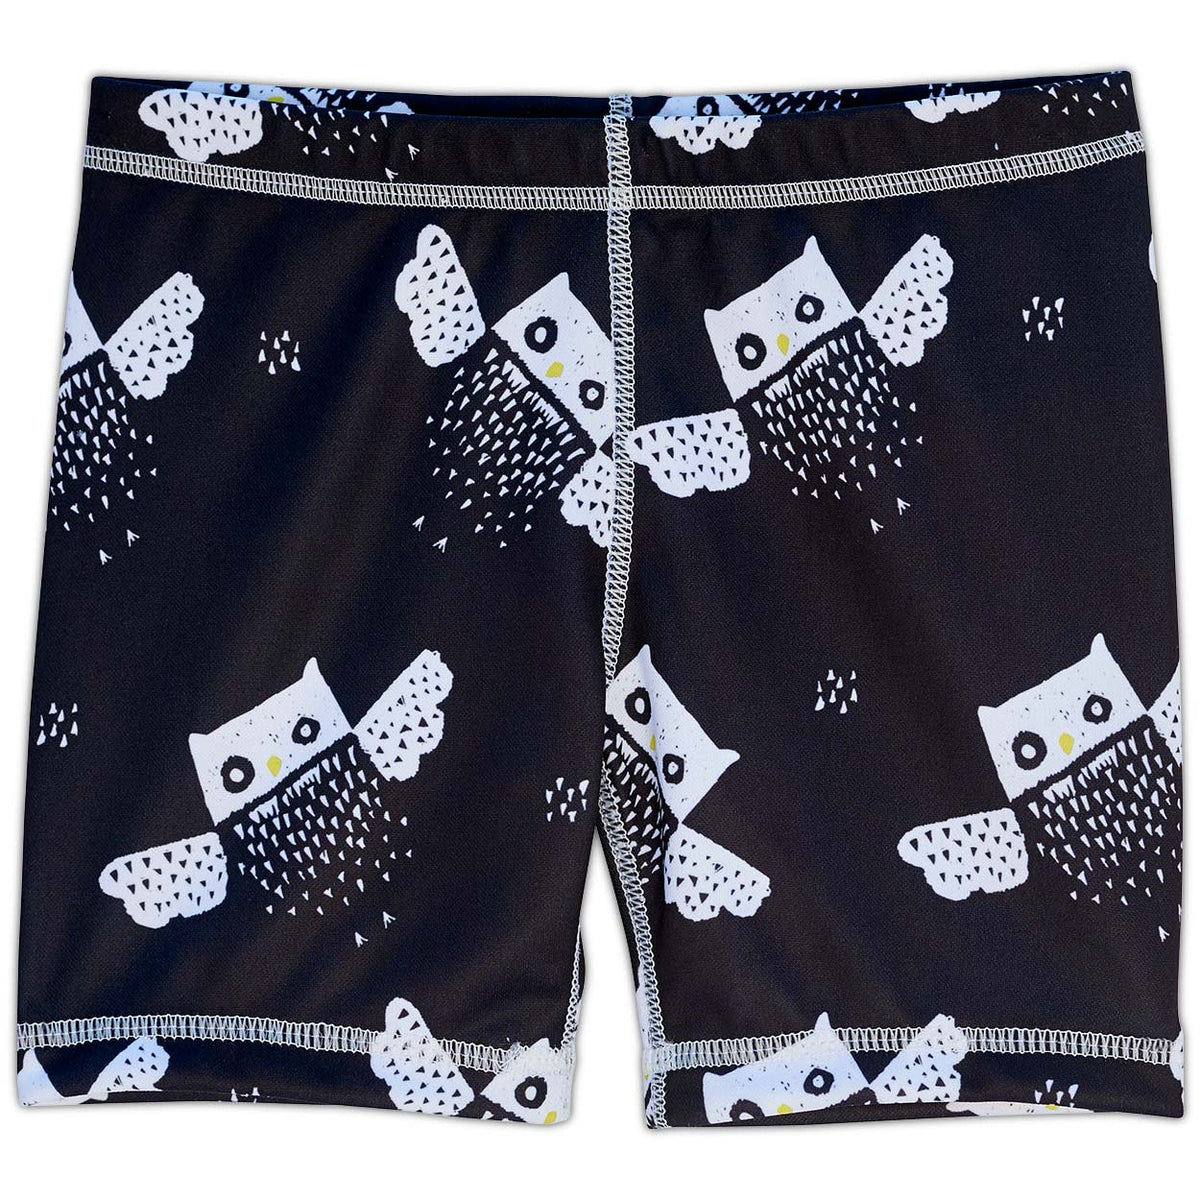 Owls Moisture Wicking Shorts Kids Boys Girls Size 2 12 Black White Unisex Sunpoplife